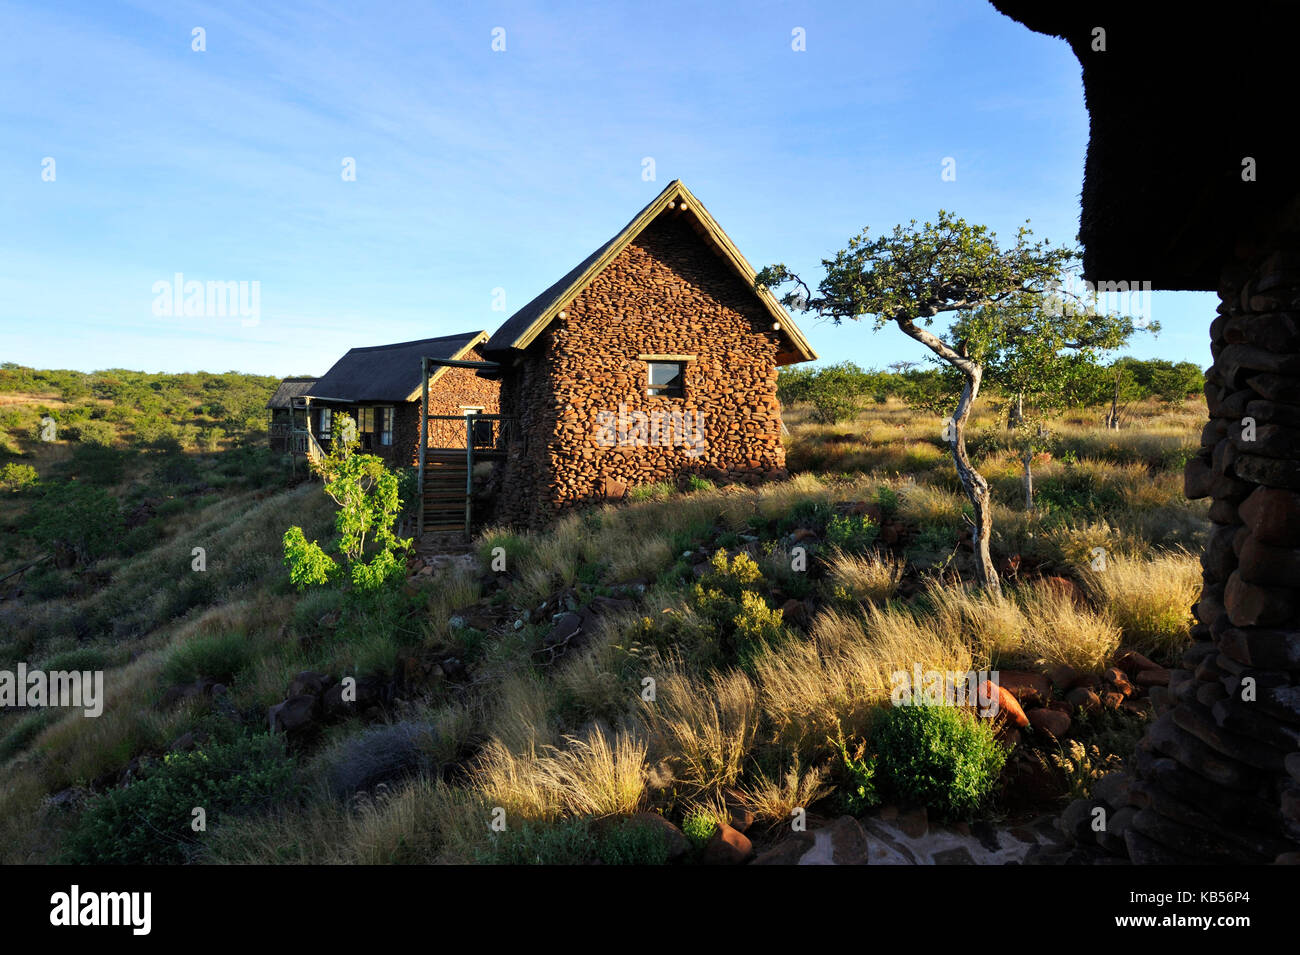 Namibia, Damaraland, Grootberg lodge with a view on Grootberg mountain Stock Photo